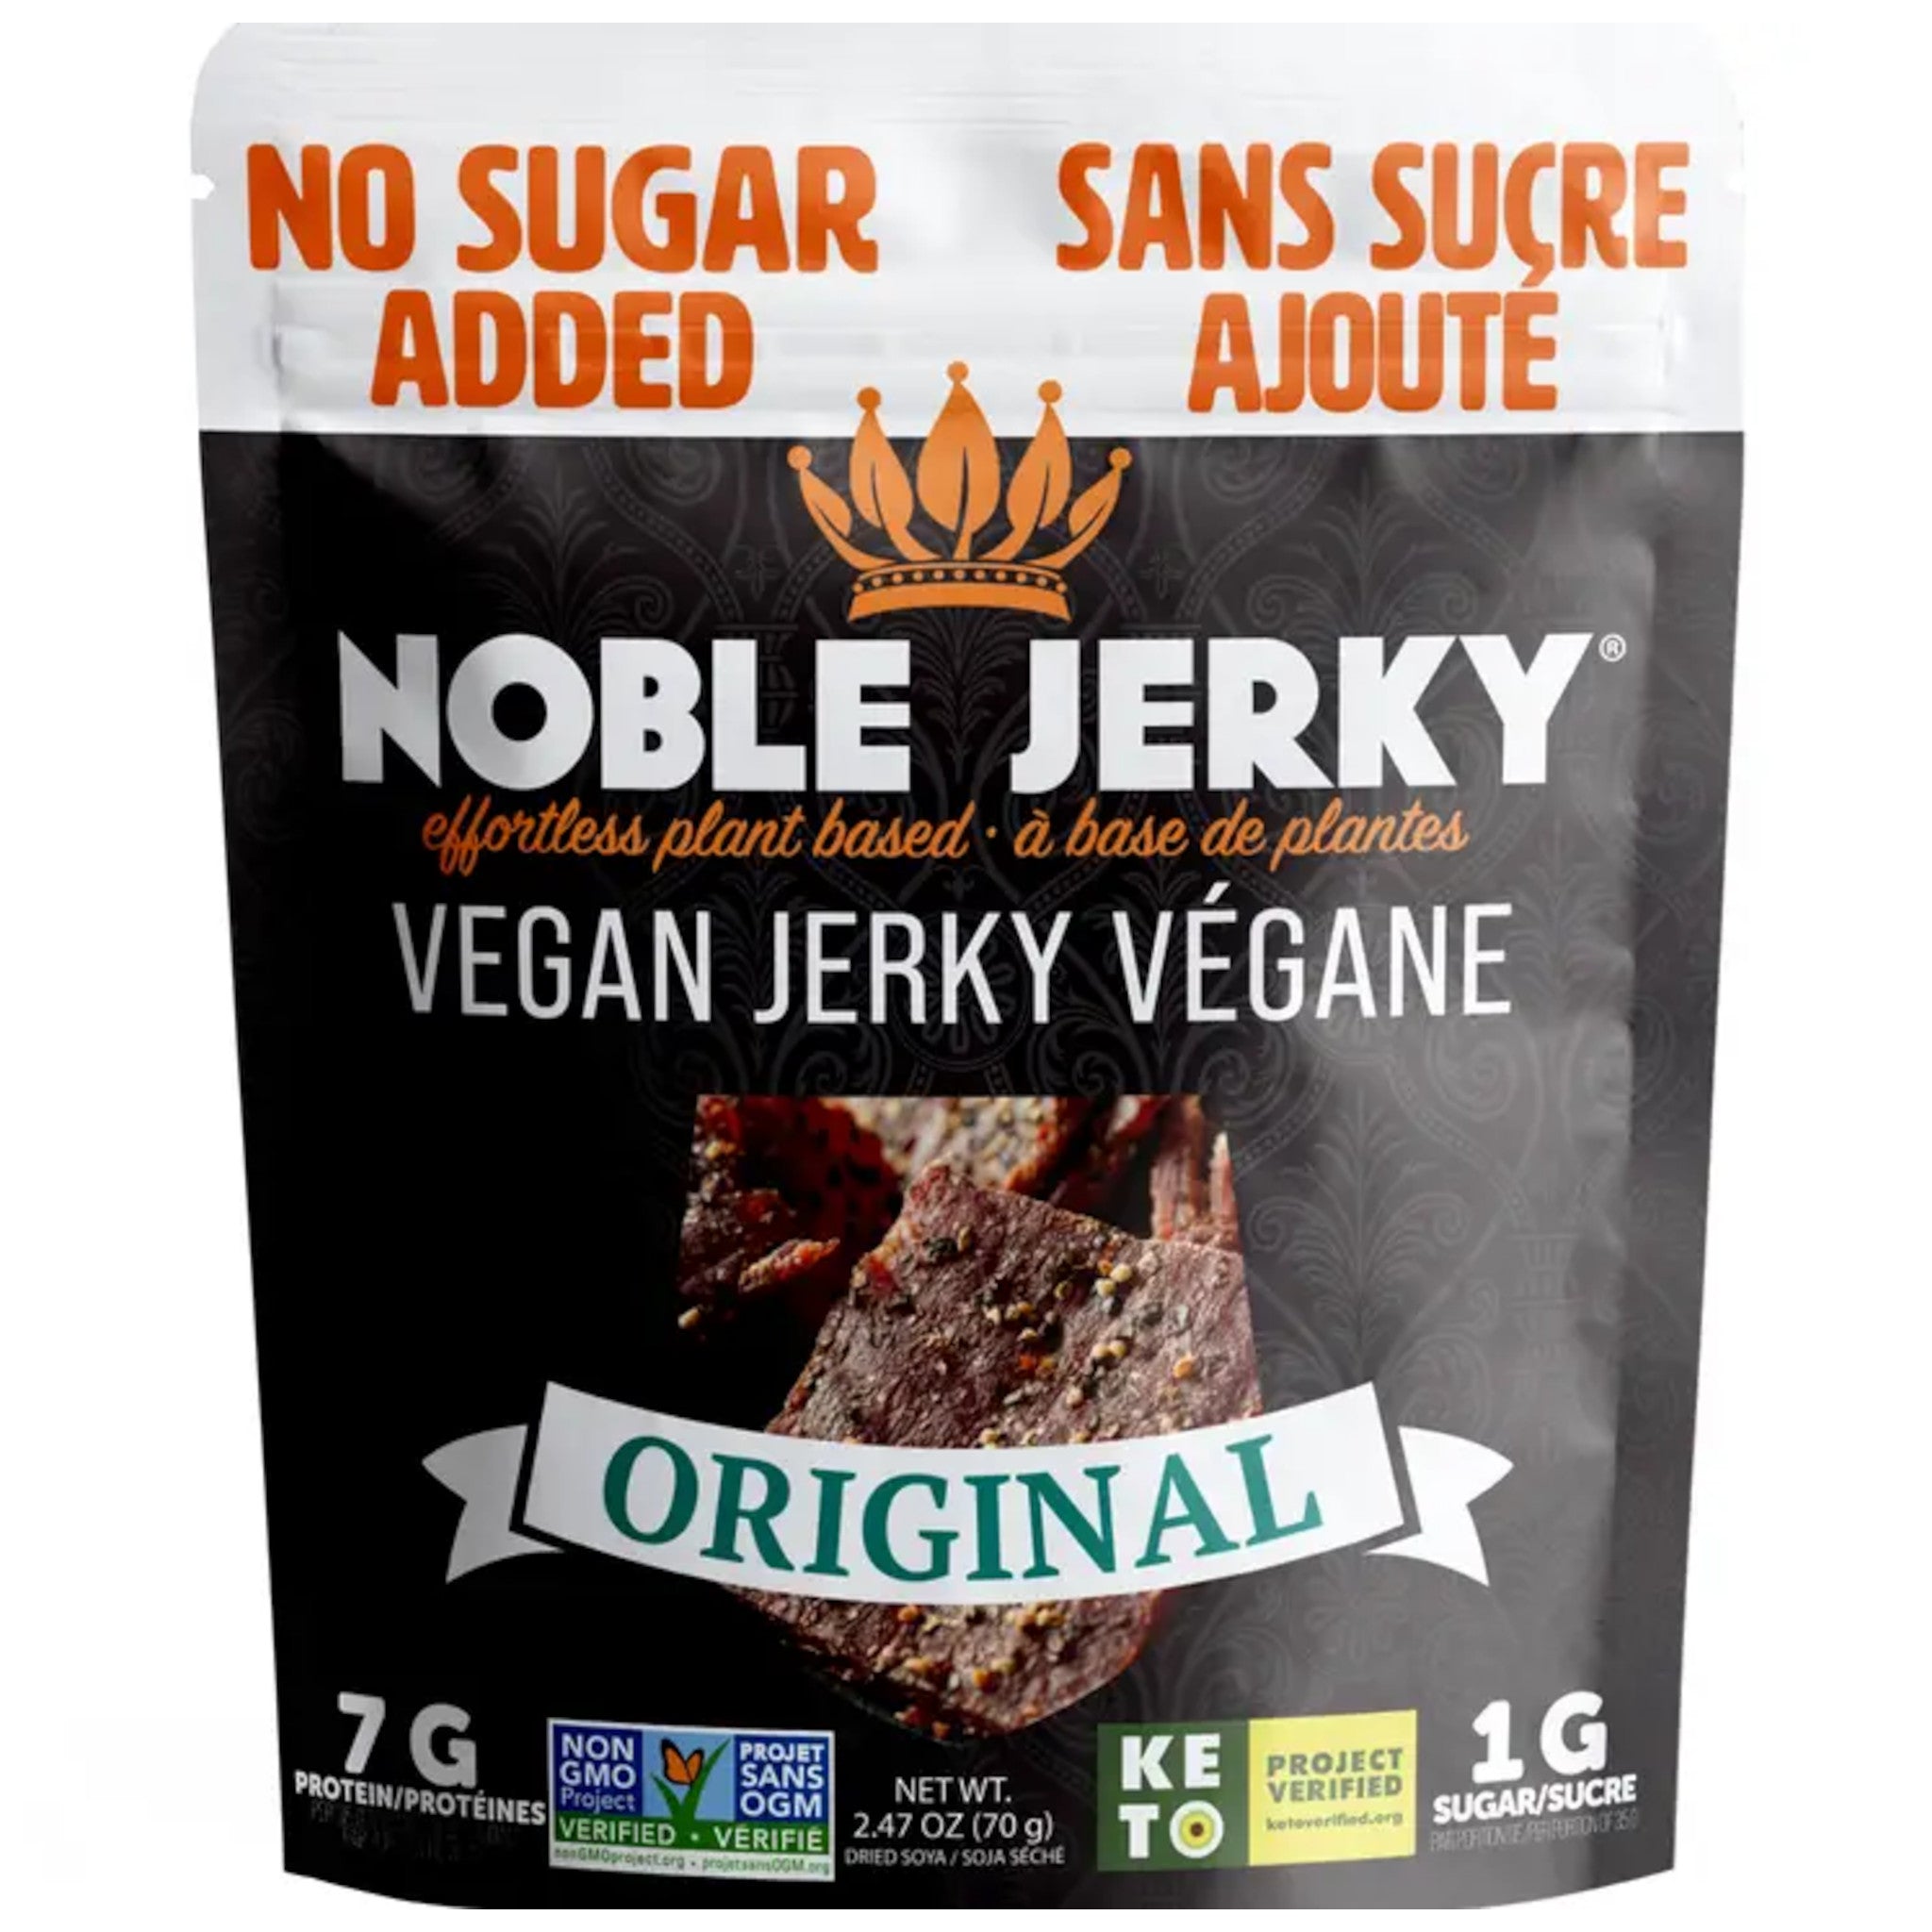 Original Vegan Jerky - No Sugar Added